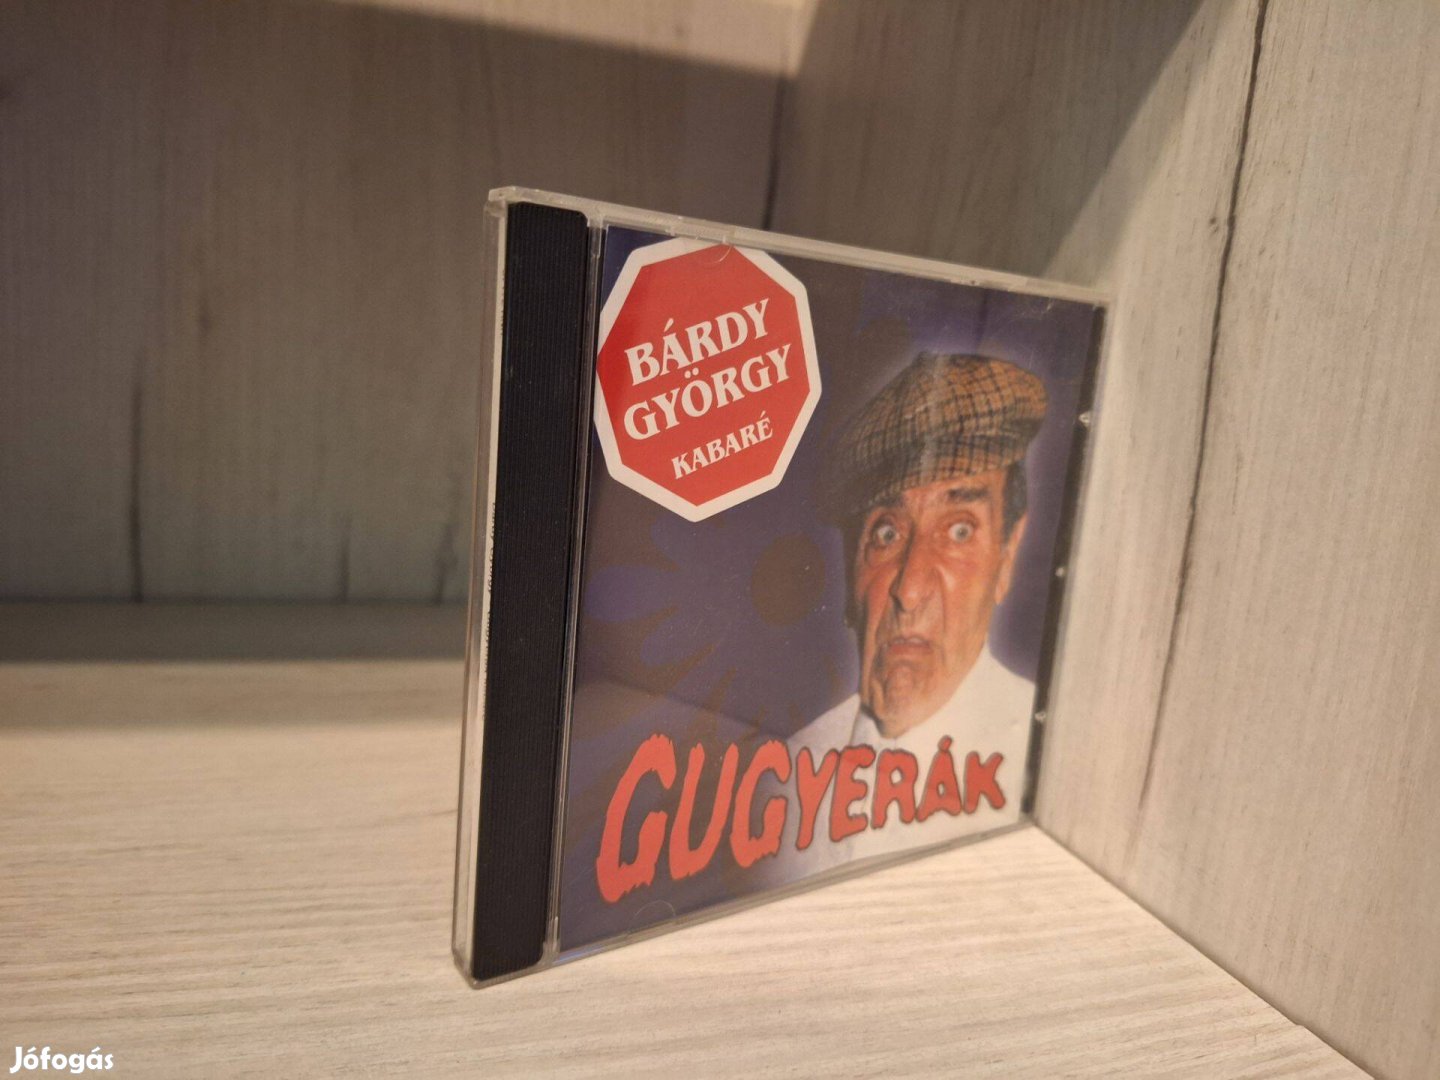 Bárdy György - Gugyerák CD